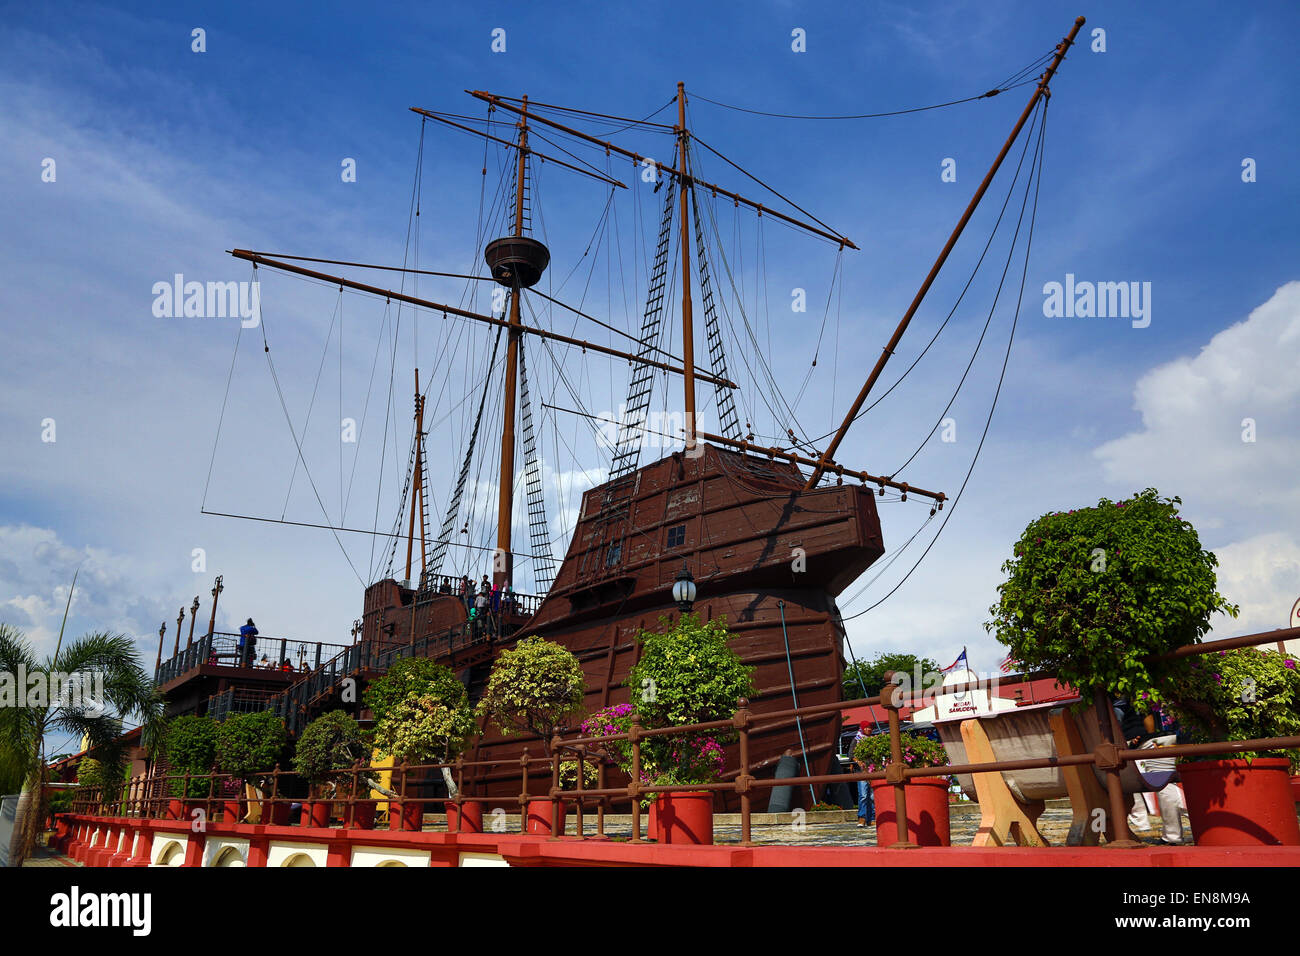 Malacca Maritime Mueum in a replica of the Flora de la Mar sailing ship in Malacca, Malaysia Stock Photo